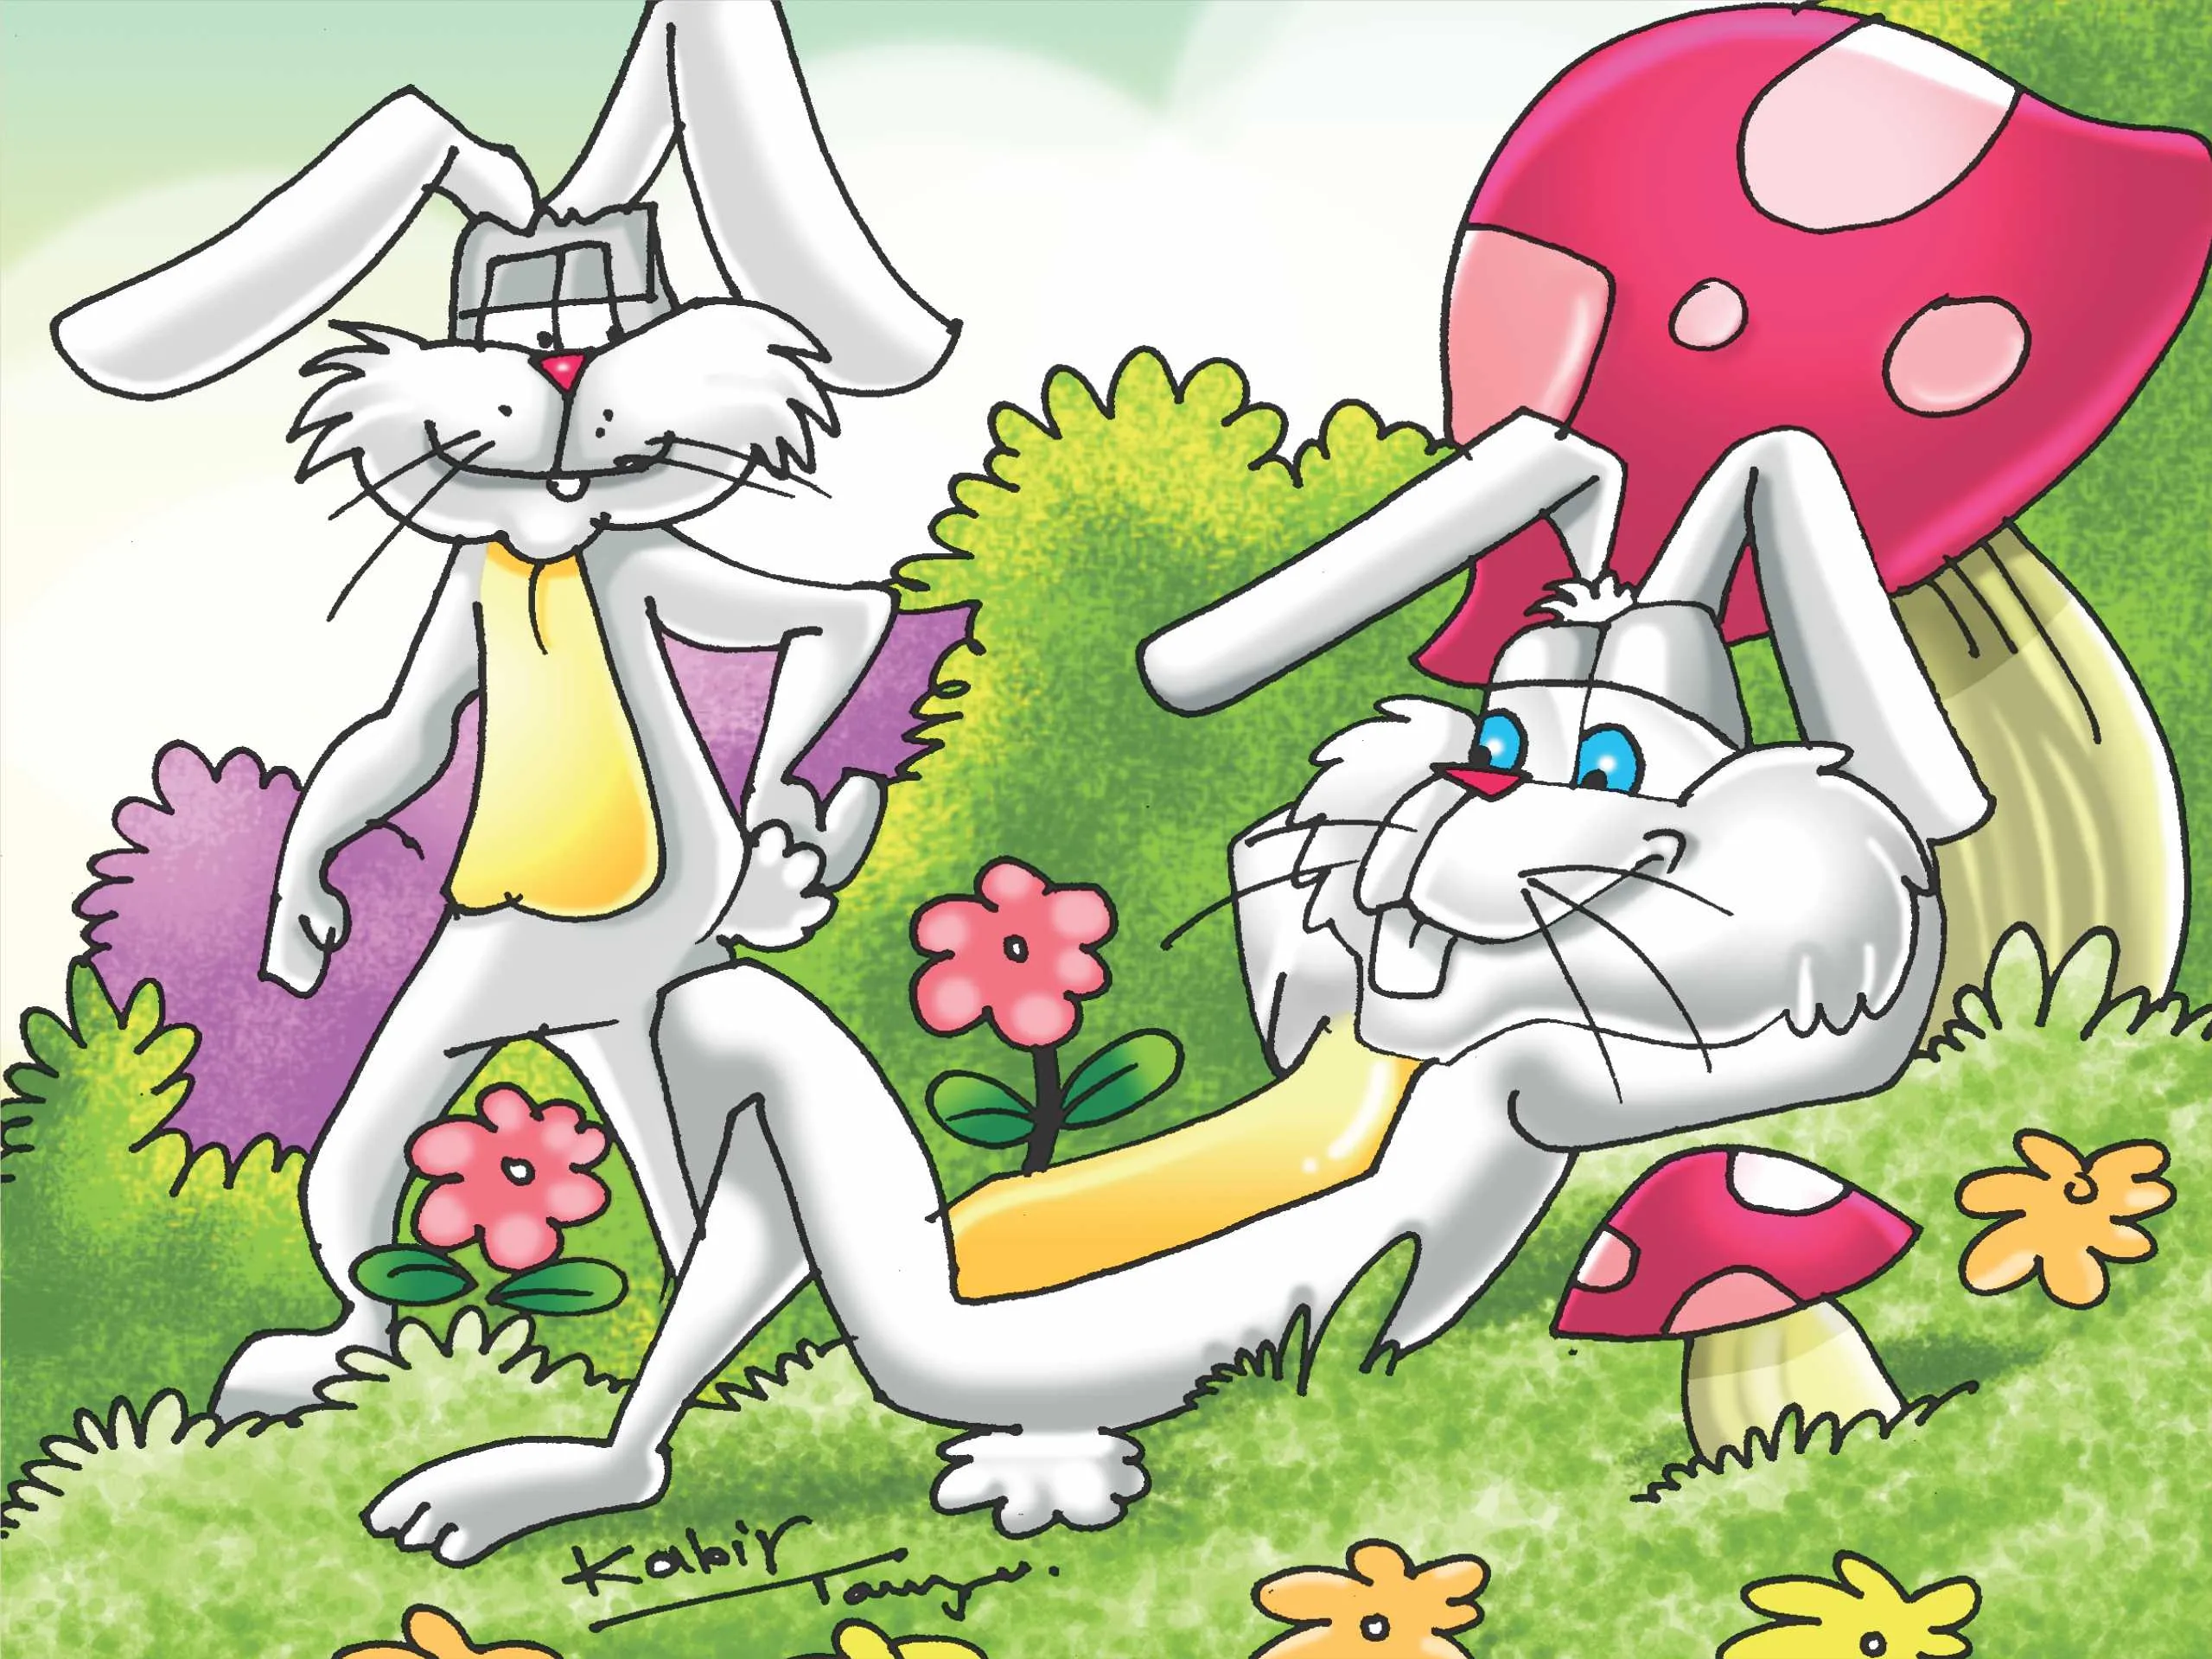 cartoon image of rabbits